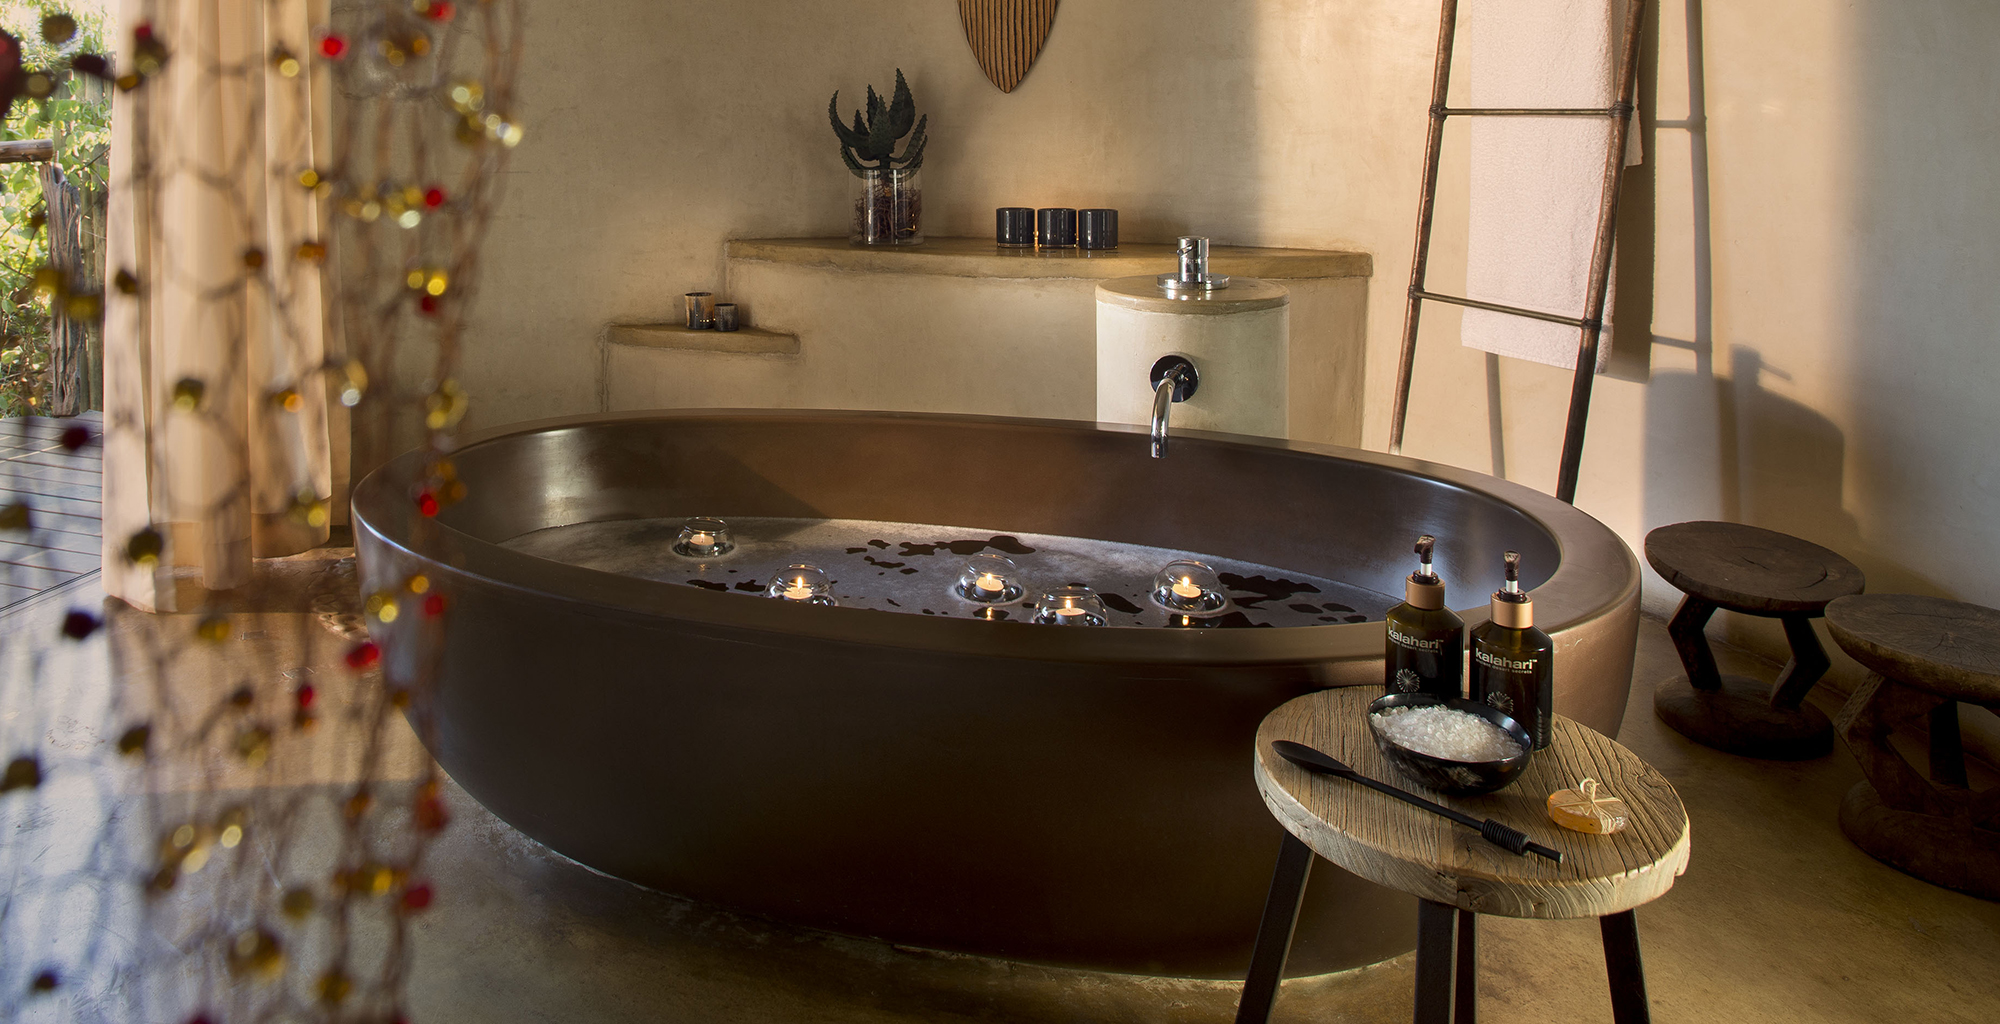 South-Africa-Marataba-Safari-Lodge-Bathroom